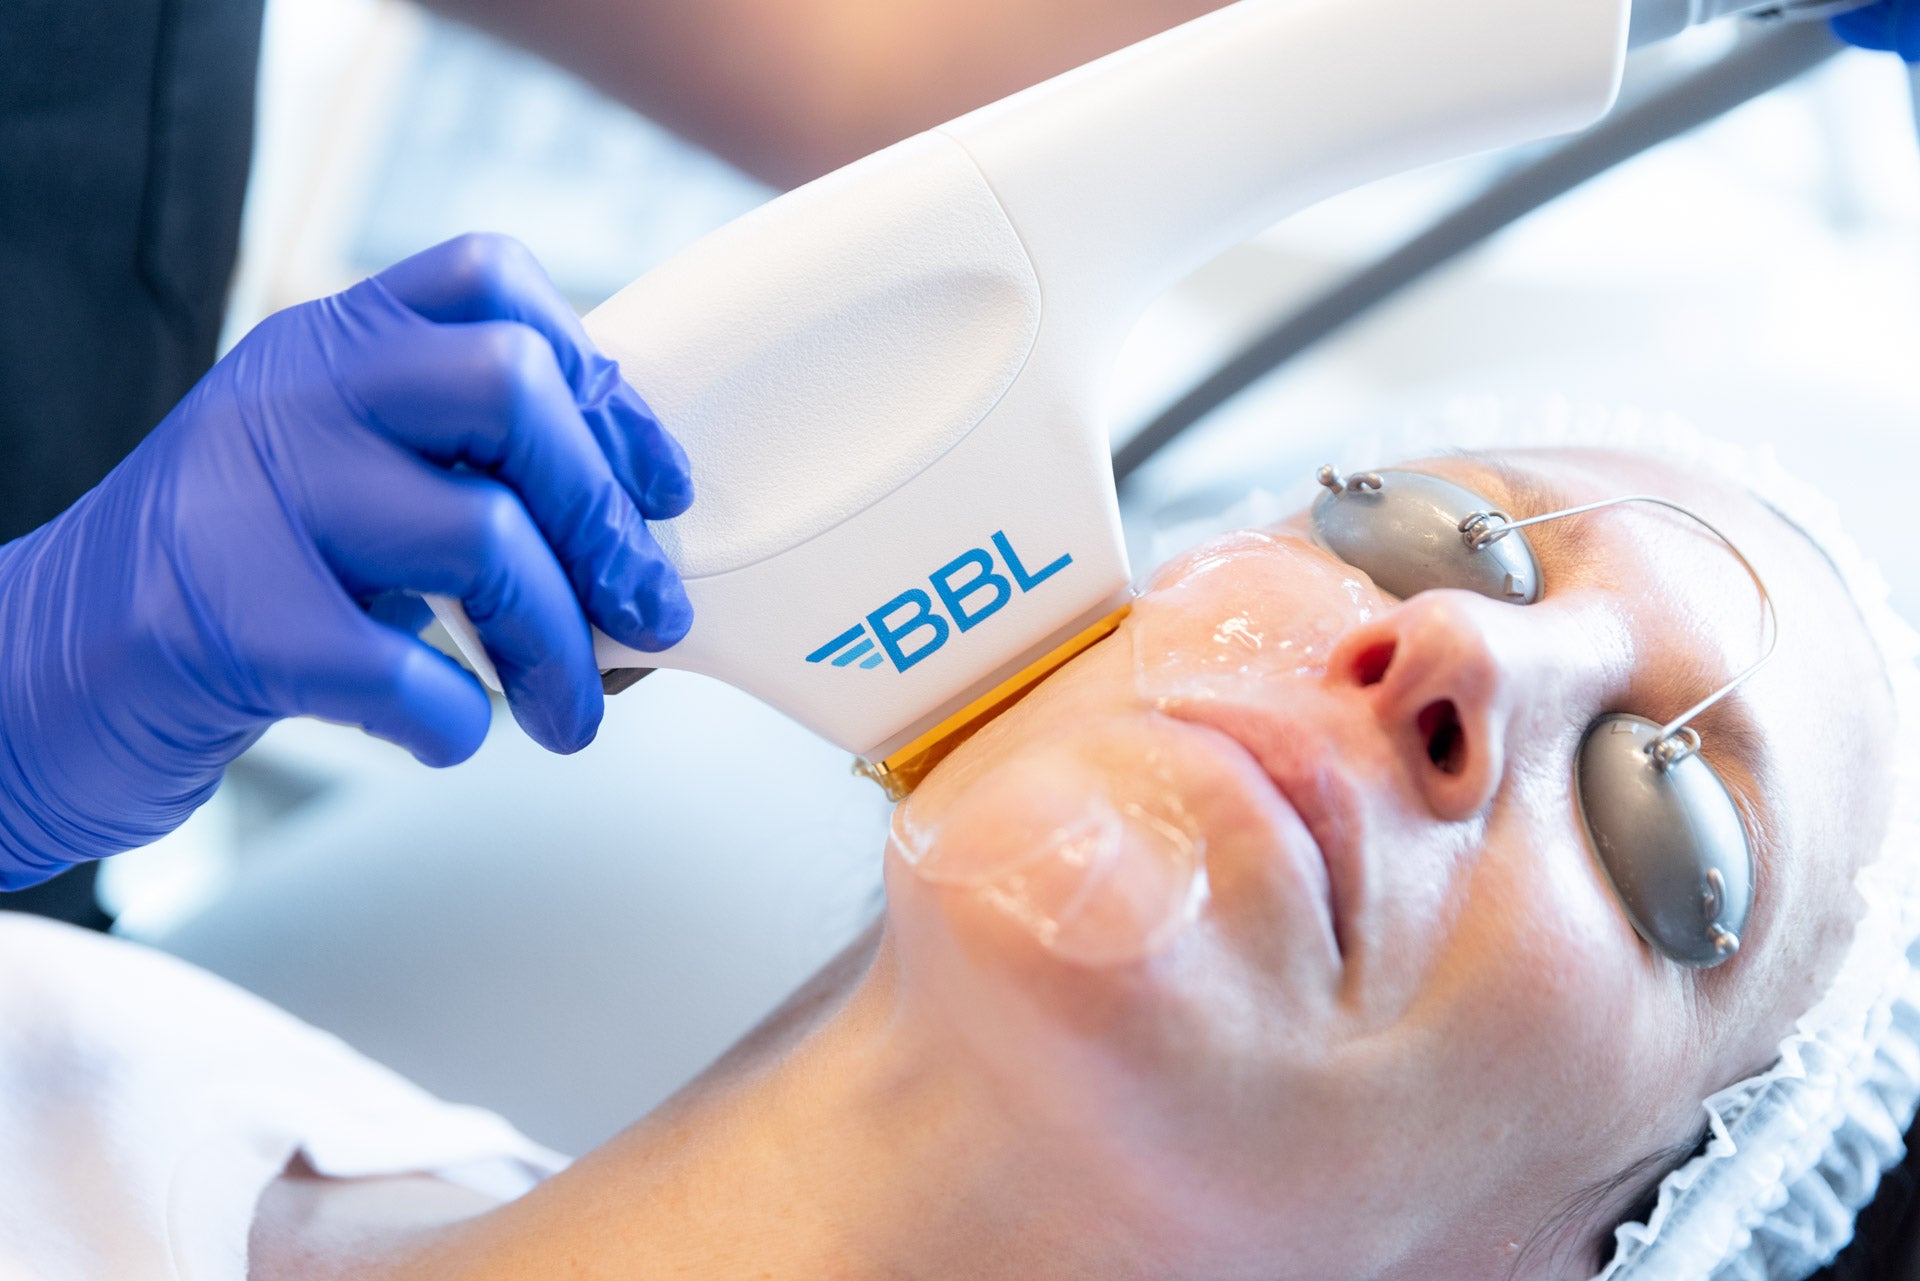 MOXI Laser + BBL Skin Rejuvenation